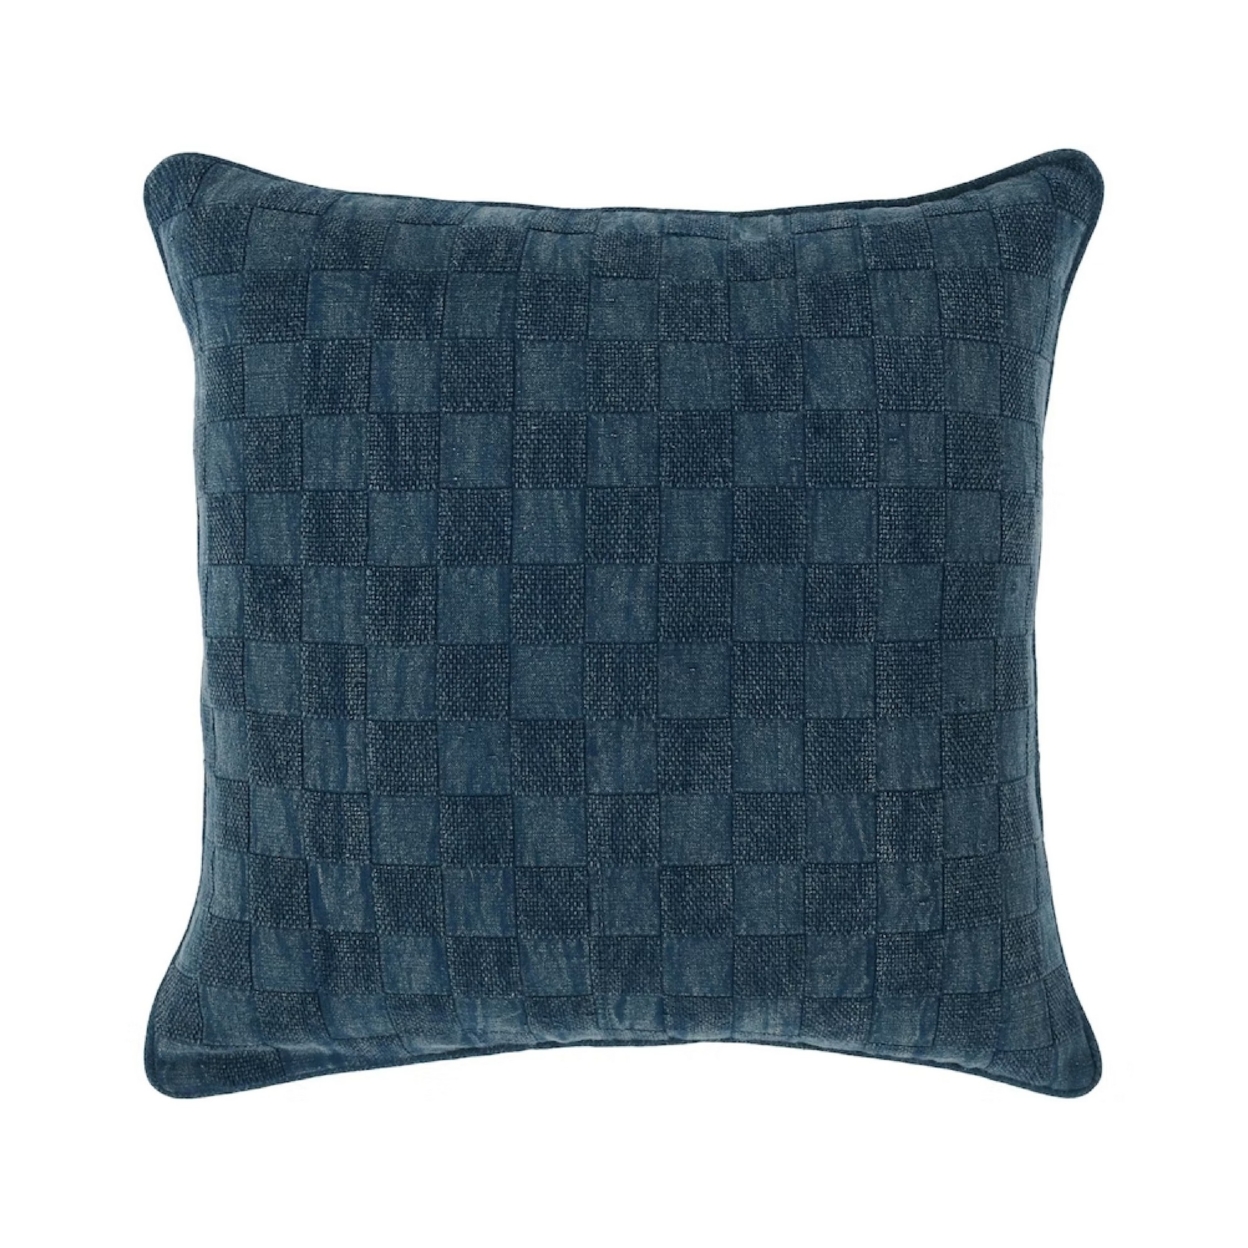 Giana 22 X 22 Square Accent Throw Pillow, Checkered Pattern, Navy Blue- Saltoro Sherpi